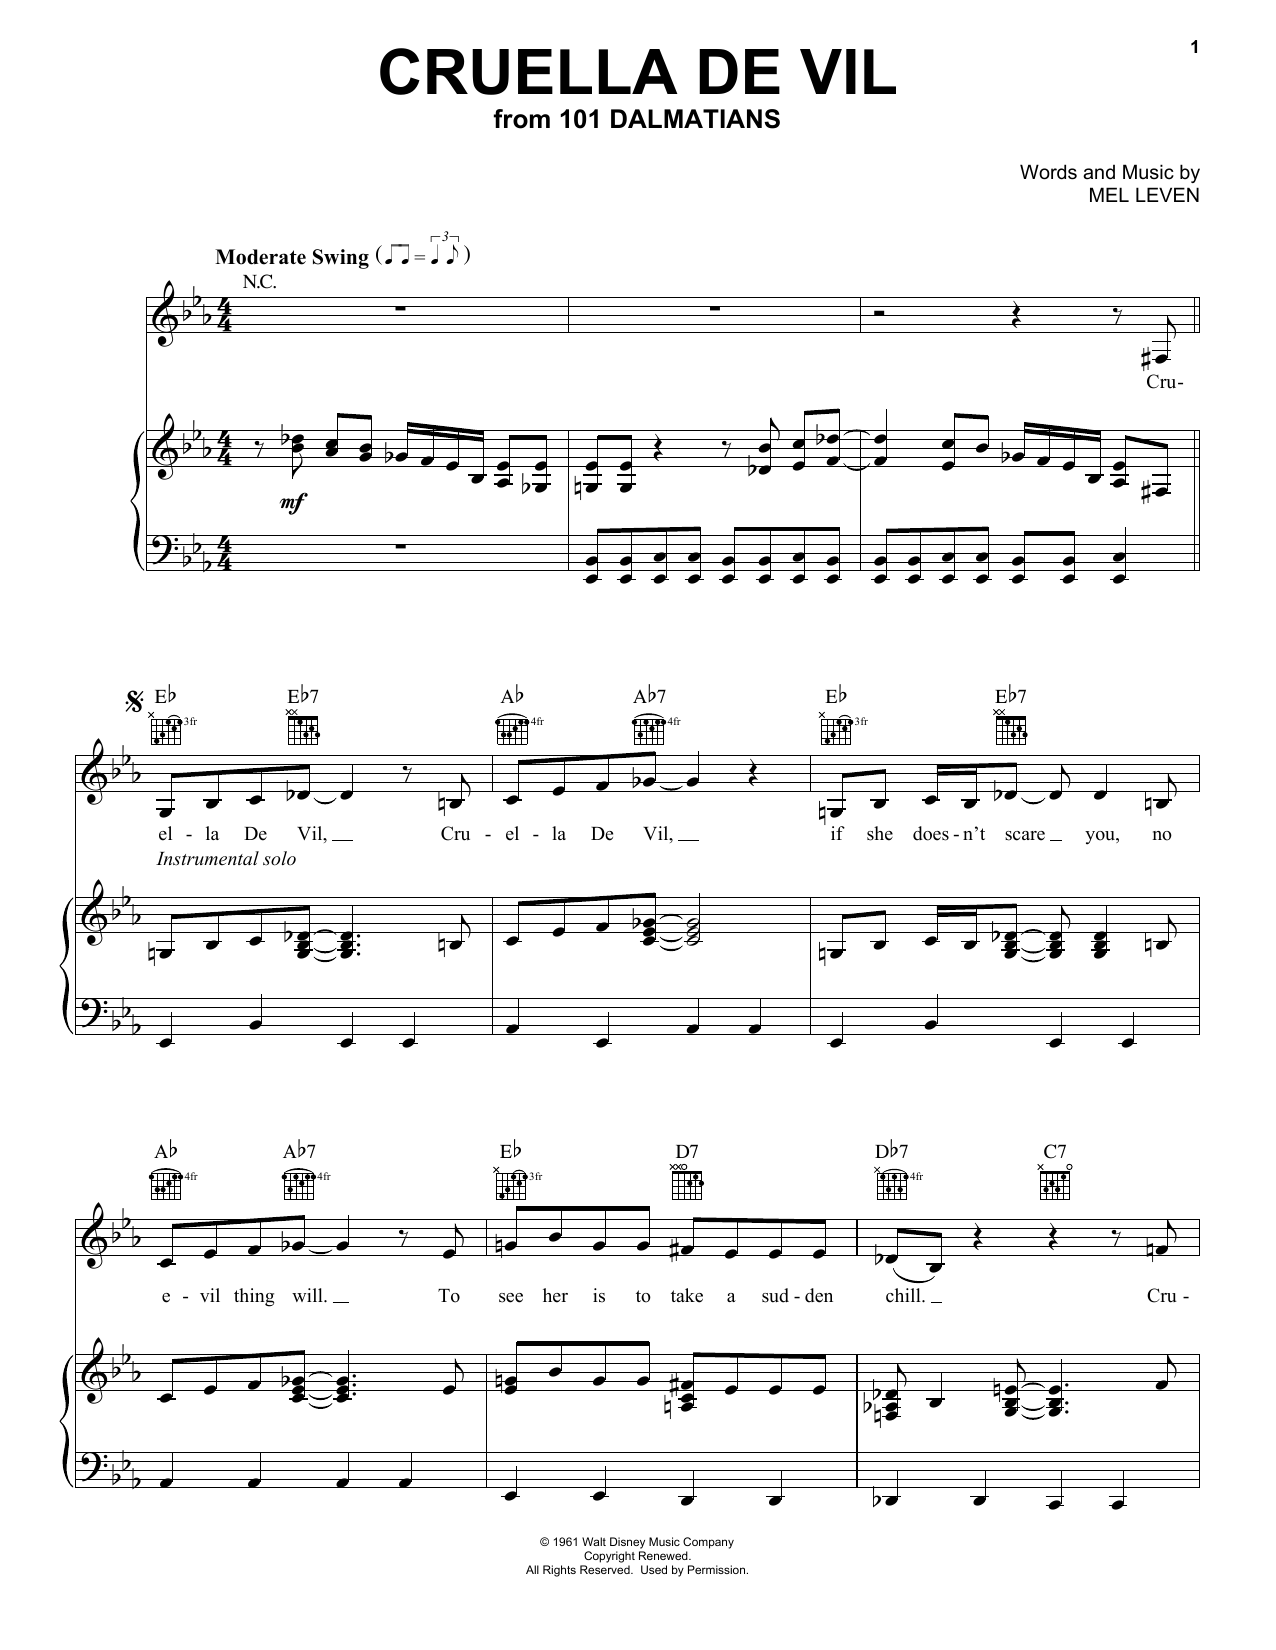 Download Mel Leven Cruella De Vil Sheet Music and learn how to play Trombone PDF digital score in minutes